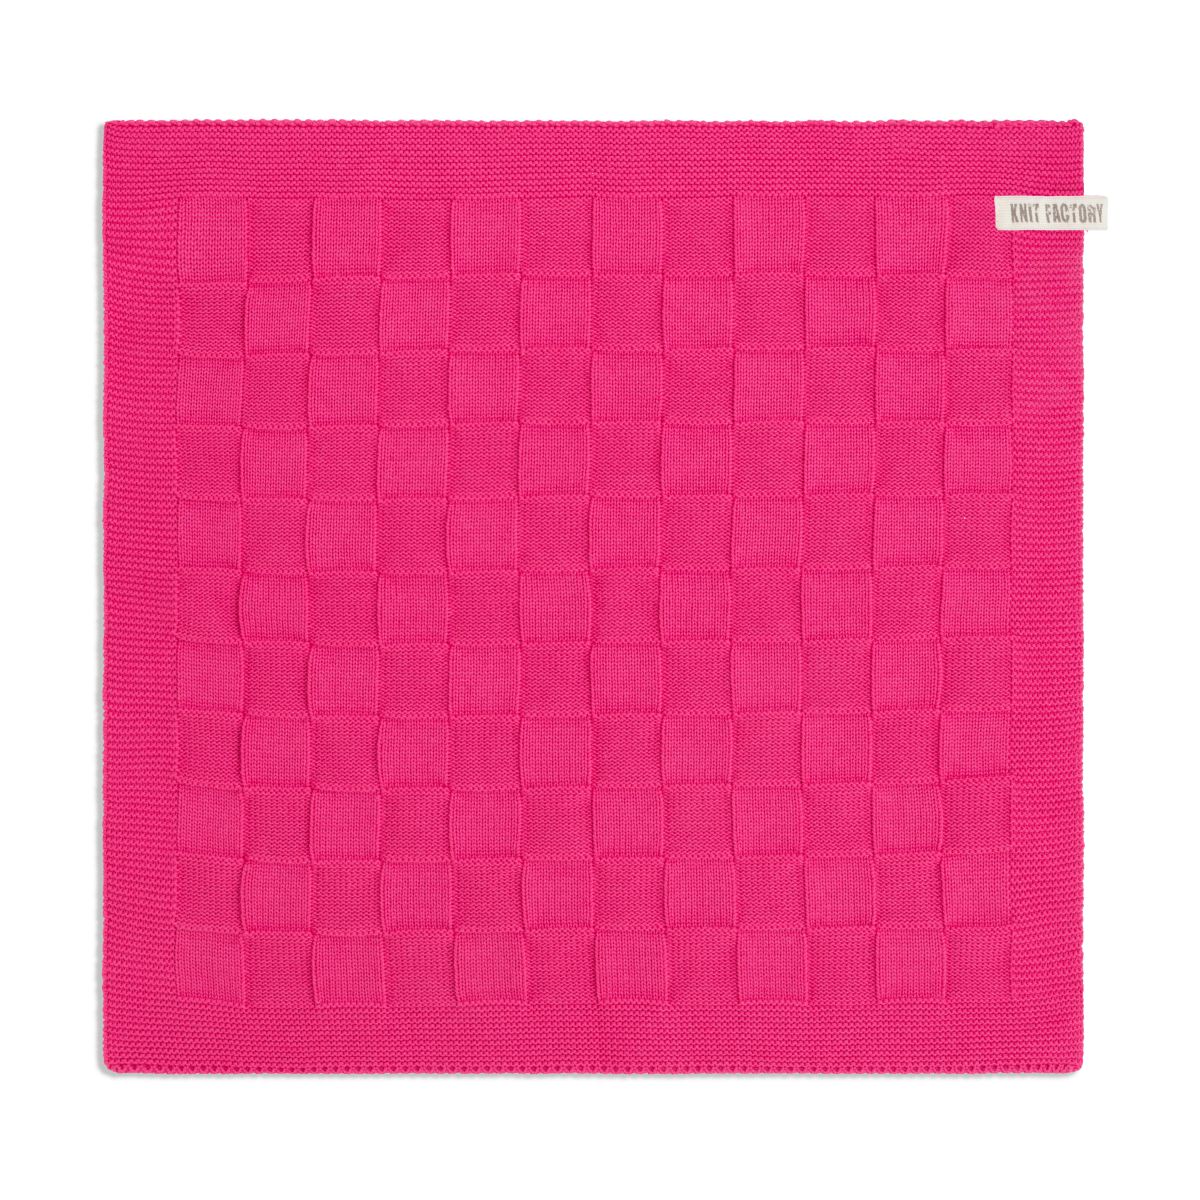 Knit Factory - gebreide keukendoek blok - roze